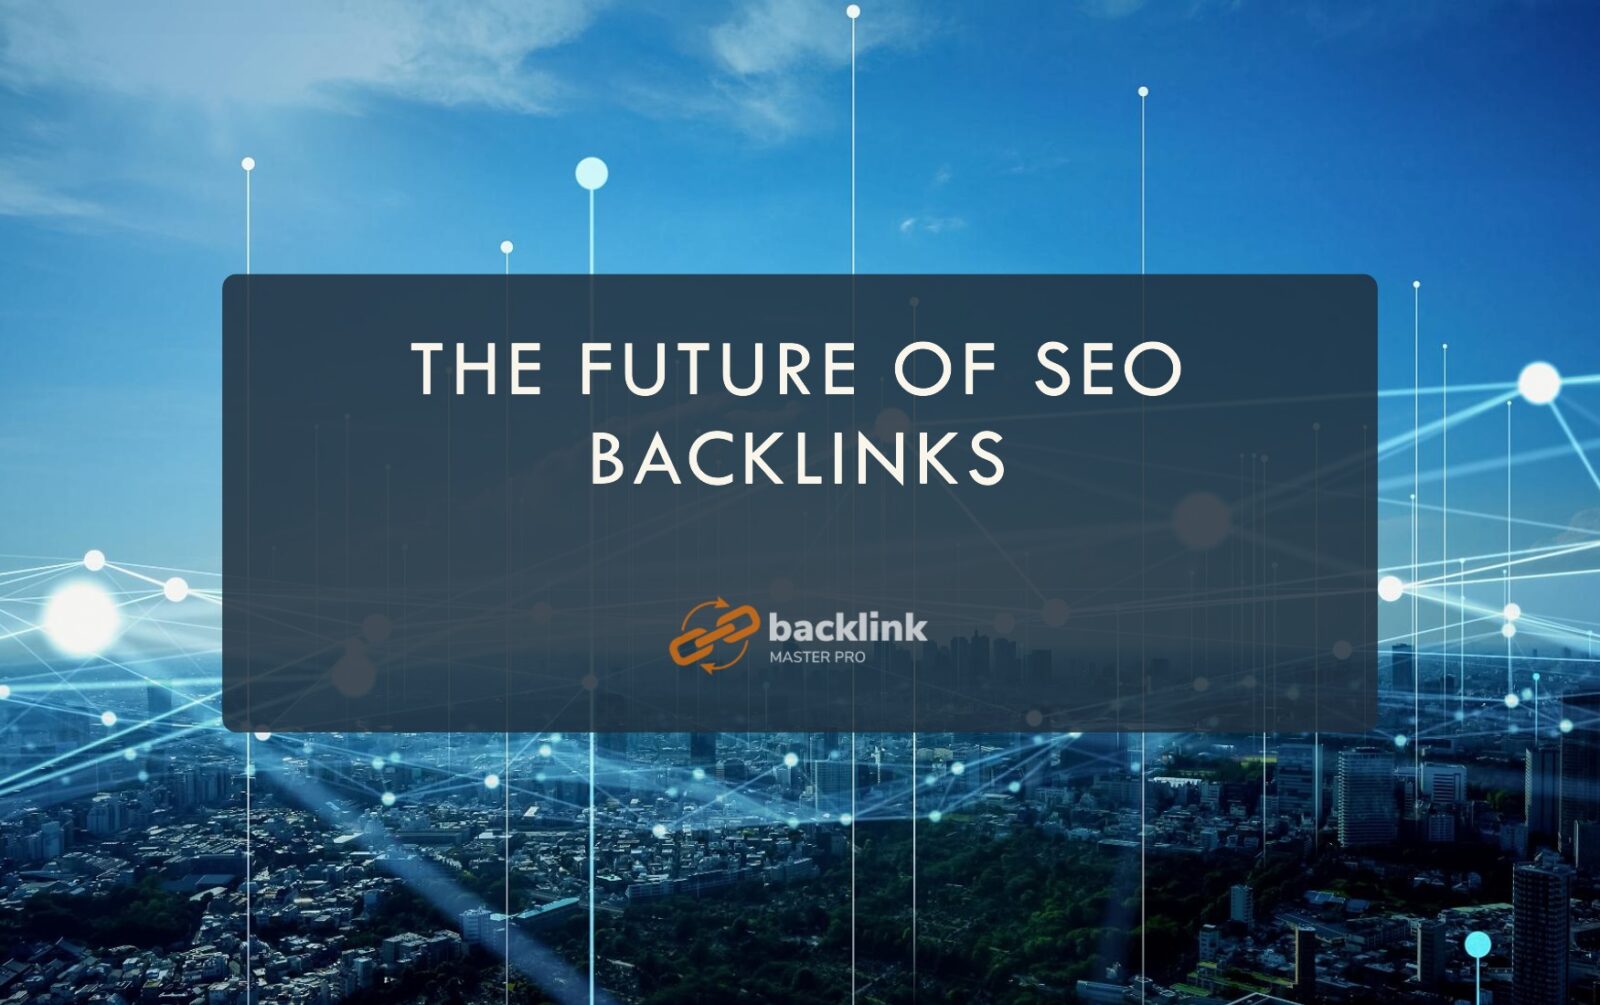 The Future of SEO Backlinks